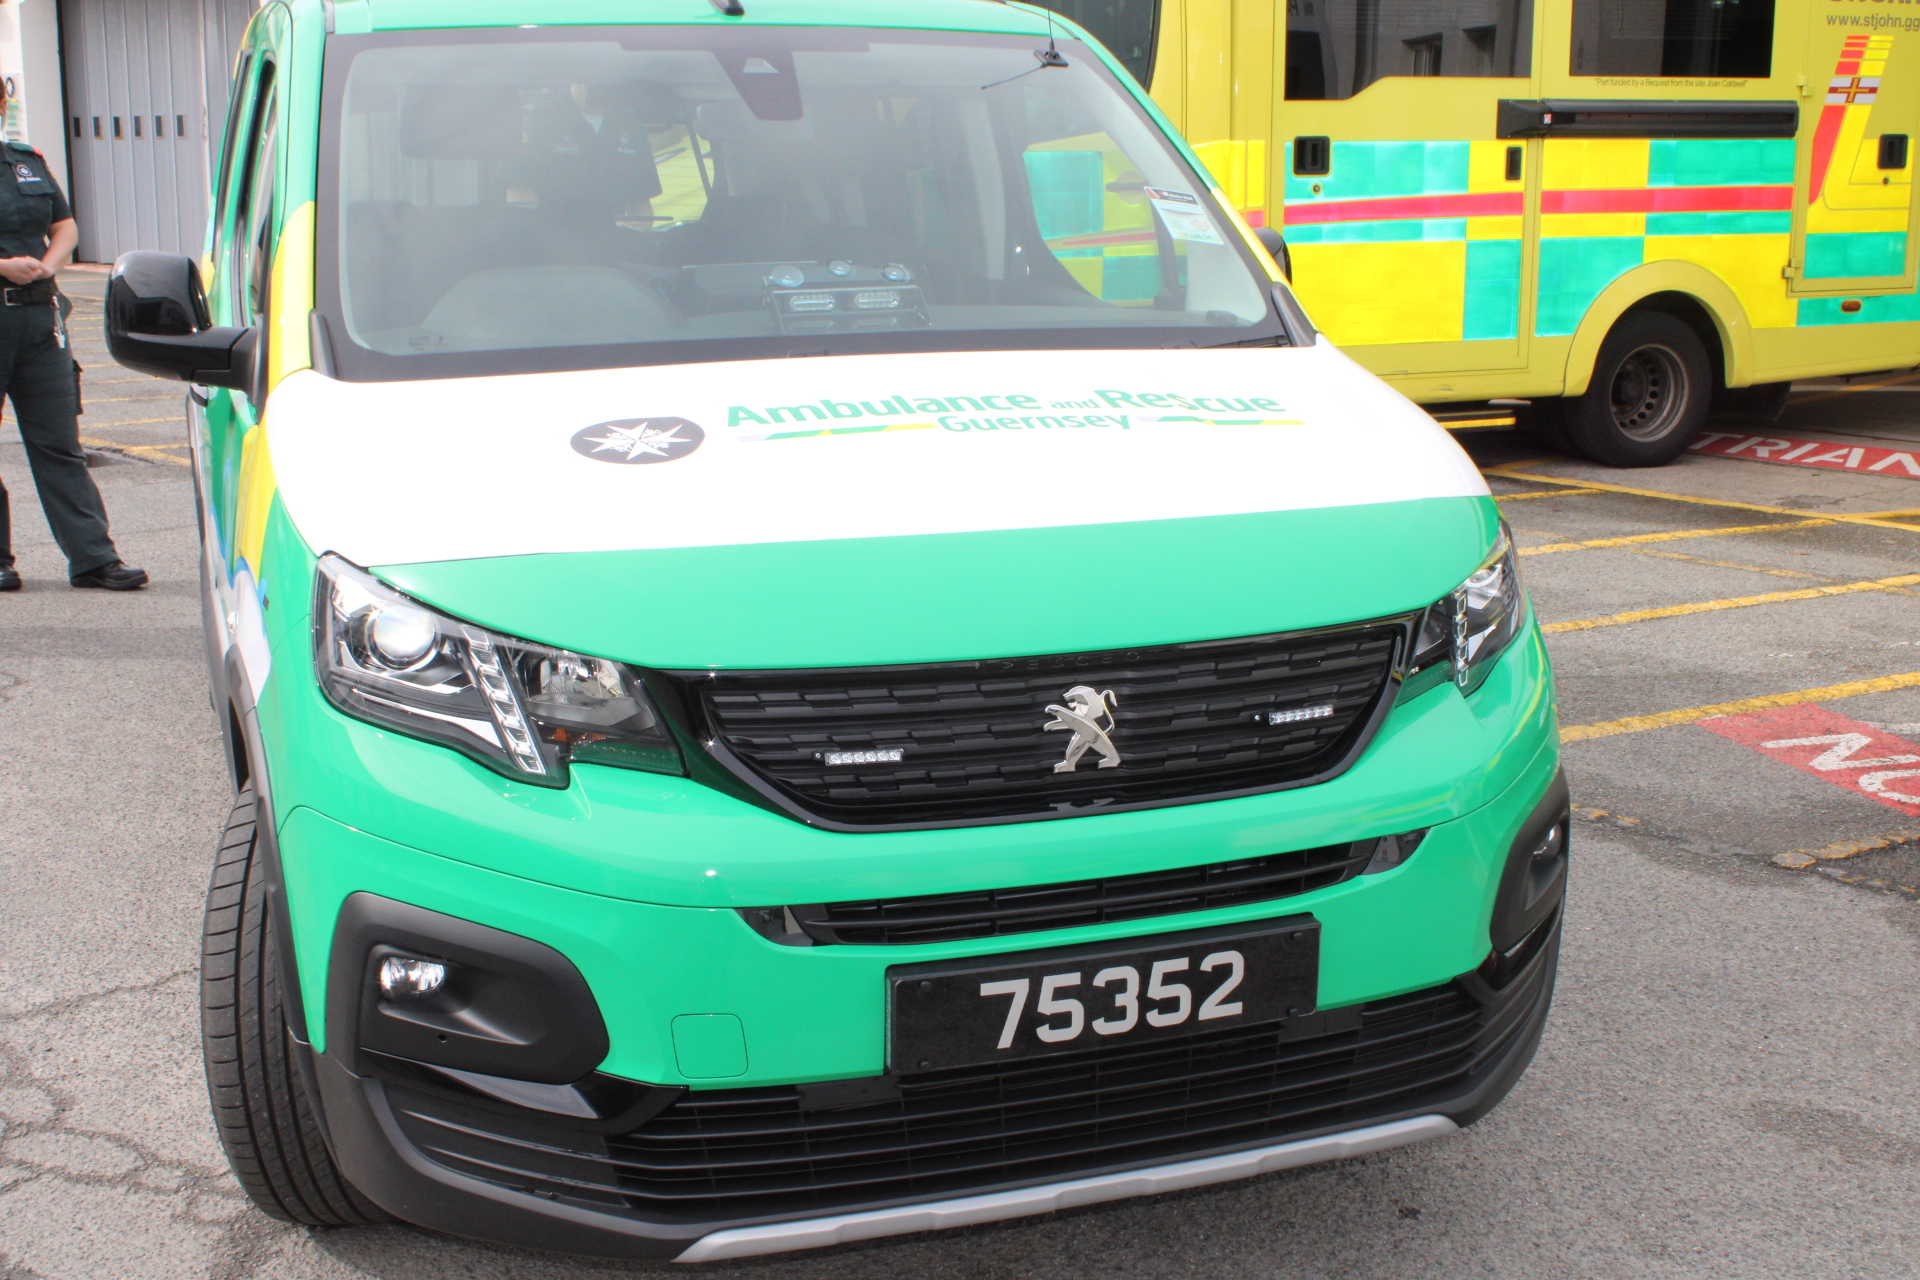 ambulance preventative care vehicle